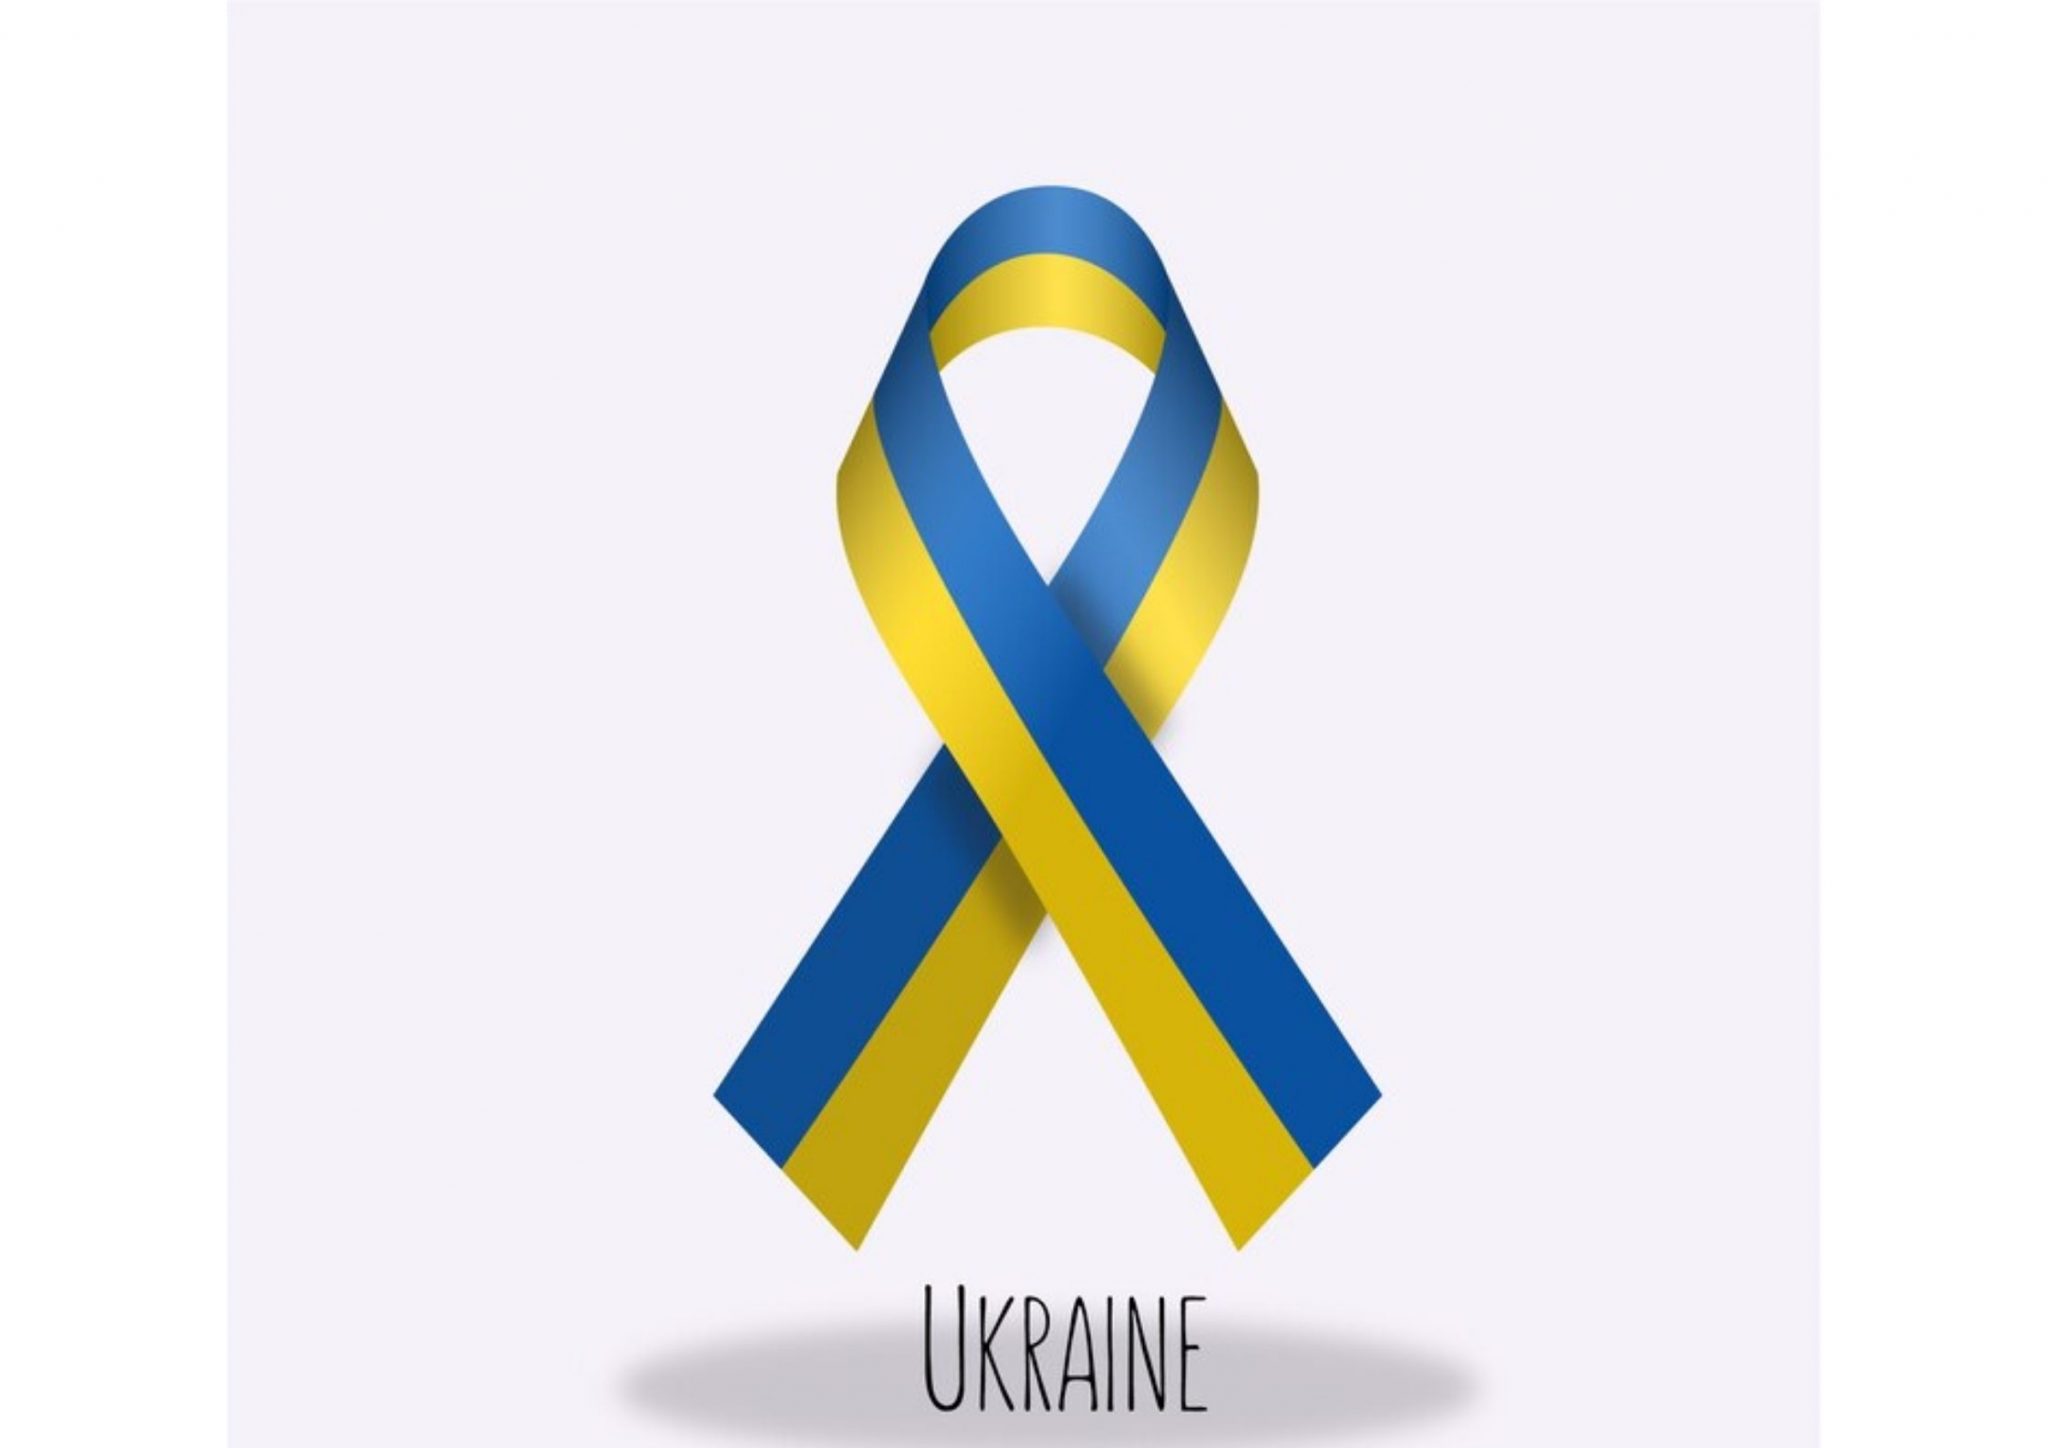 Solidarni z Ukrainą - ZBIÓRKA